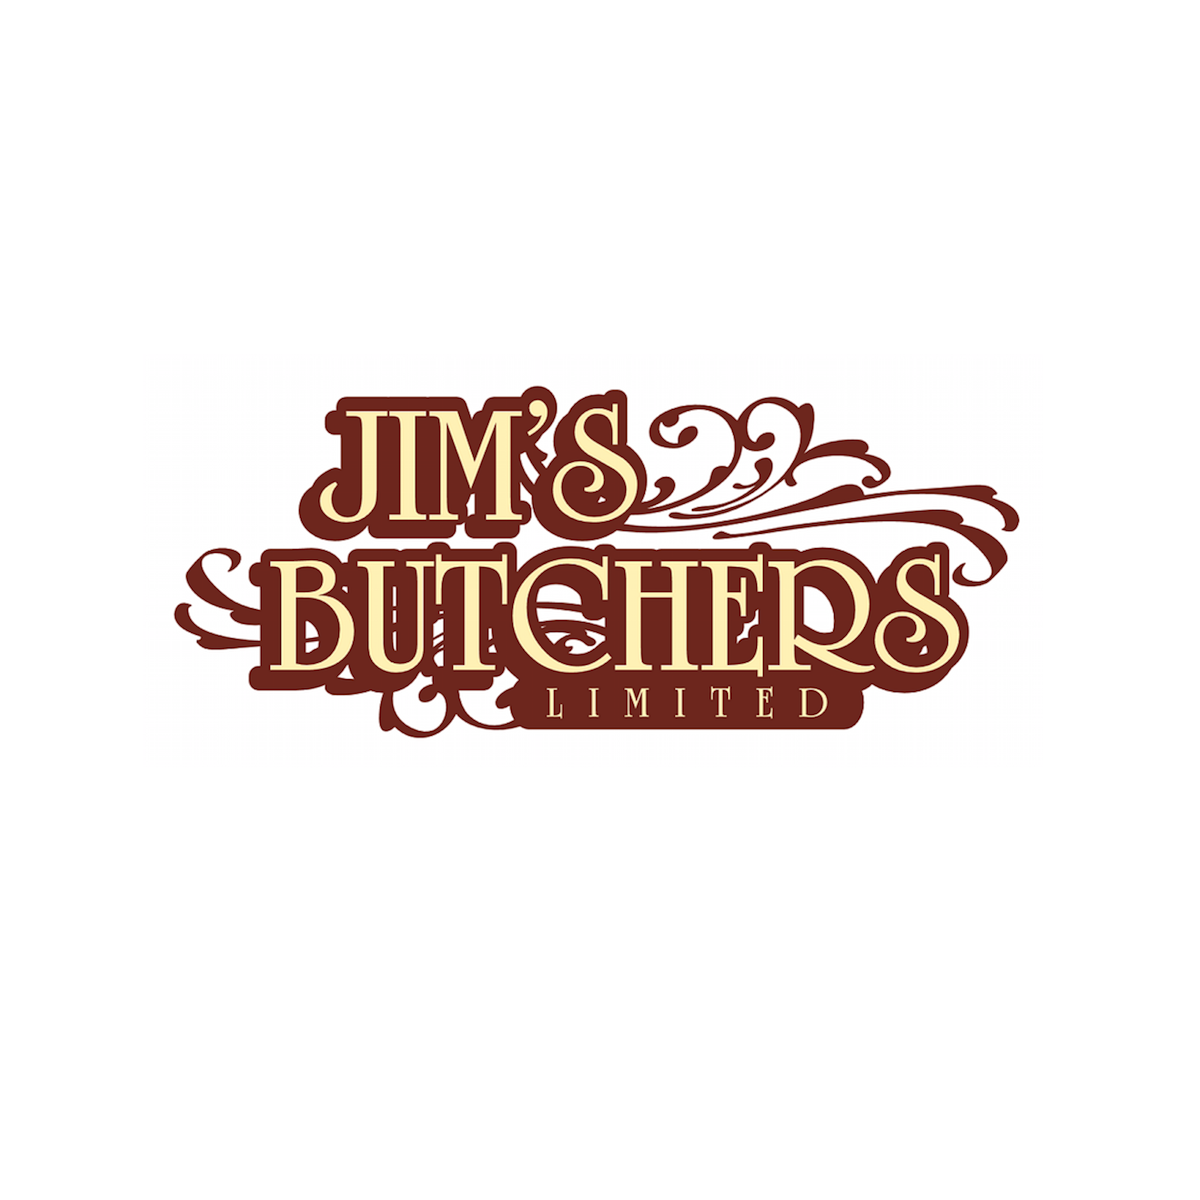 Jim's Butchers brand logo